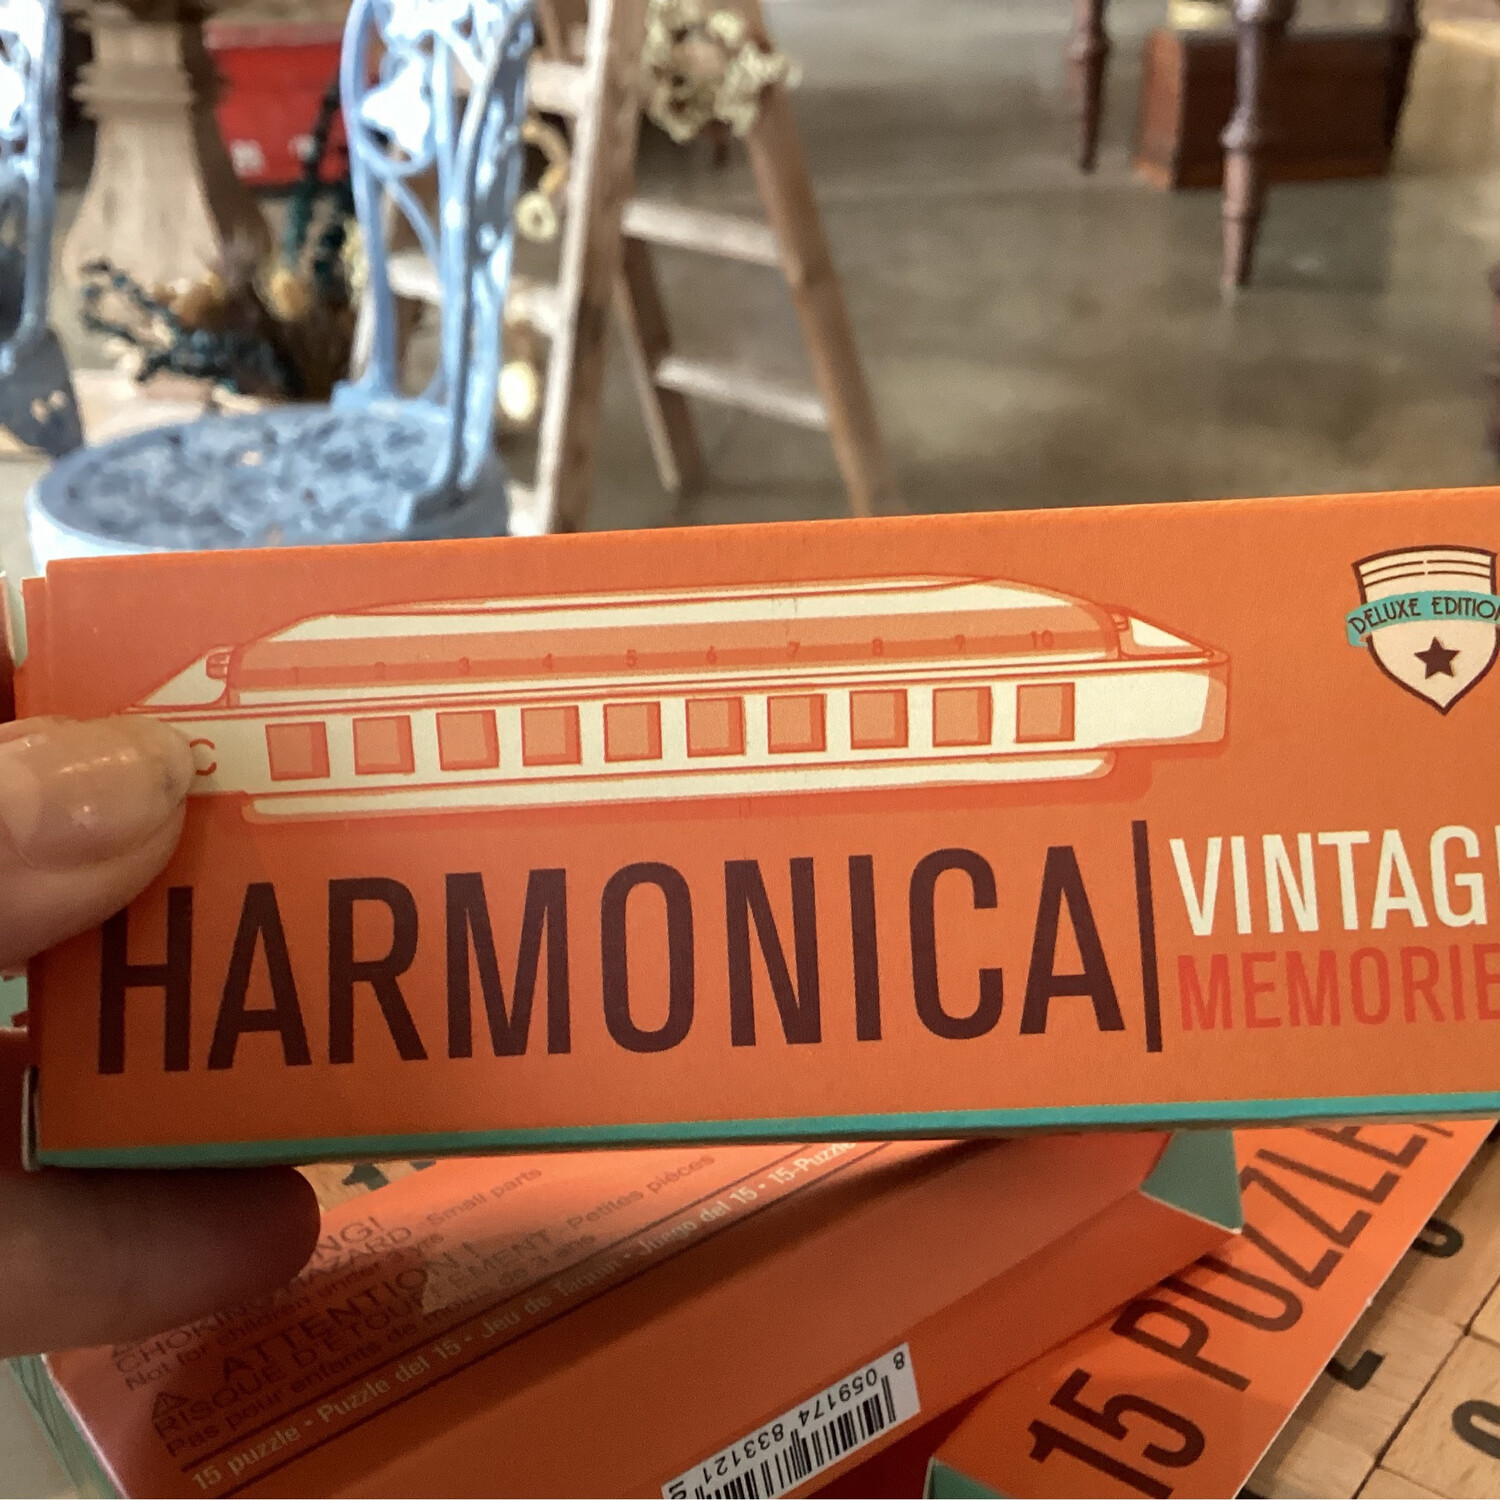 Harmonica Vintage Memories